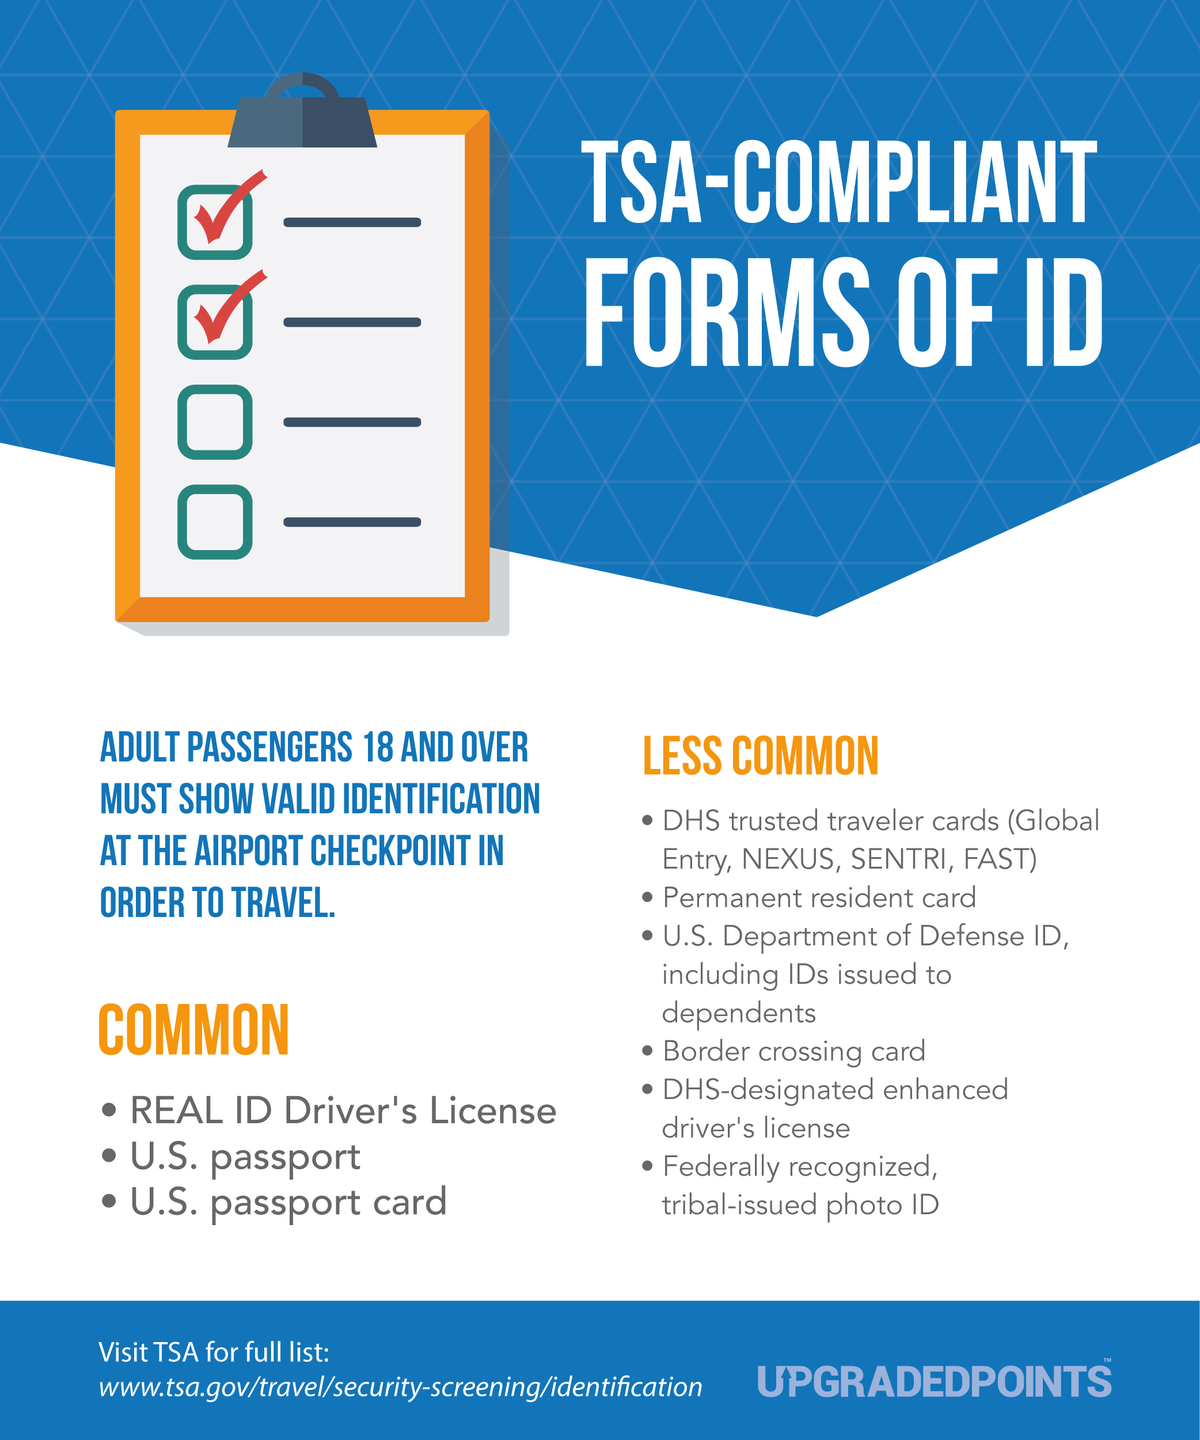 TSA Compliant forms of ID